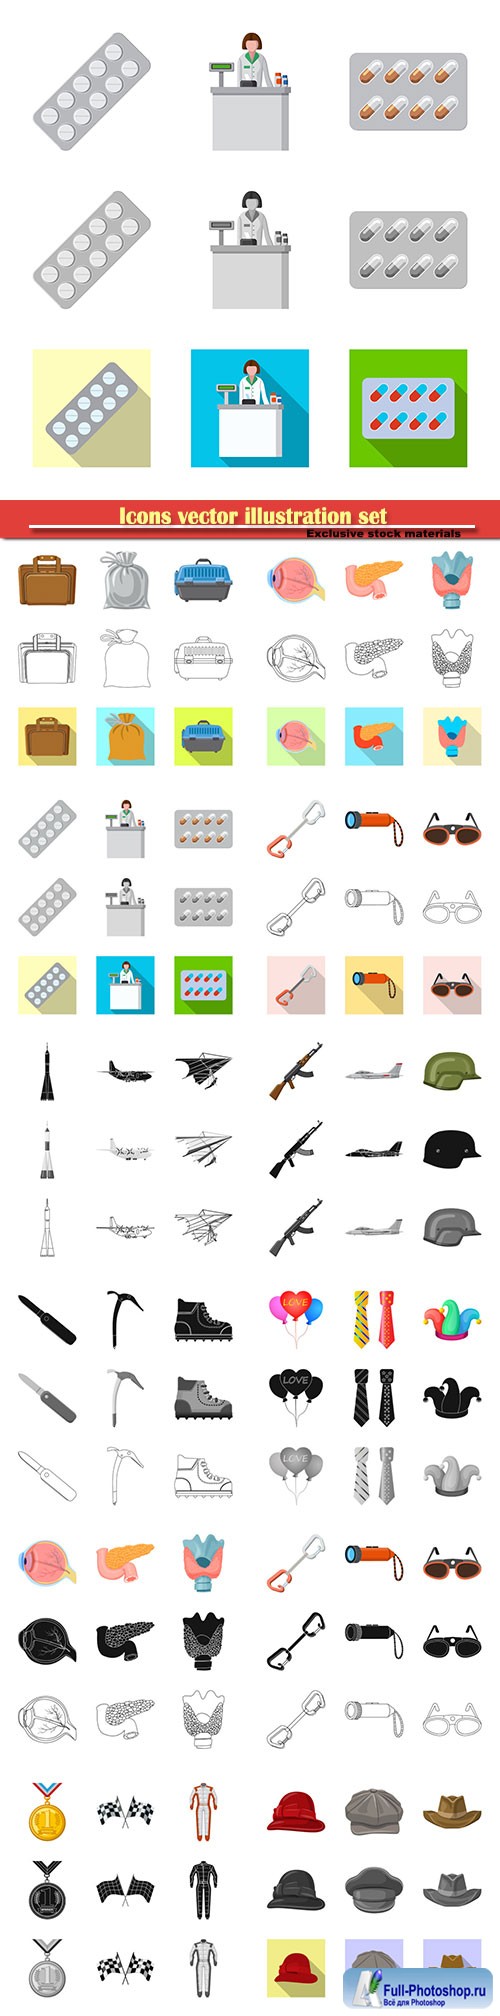 Icons vector illustration set